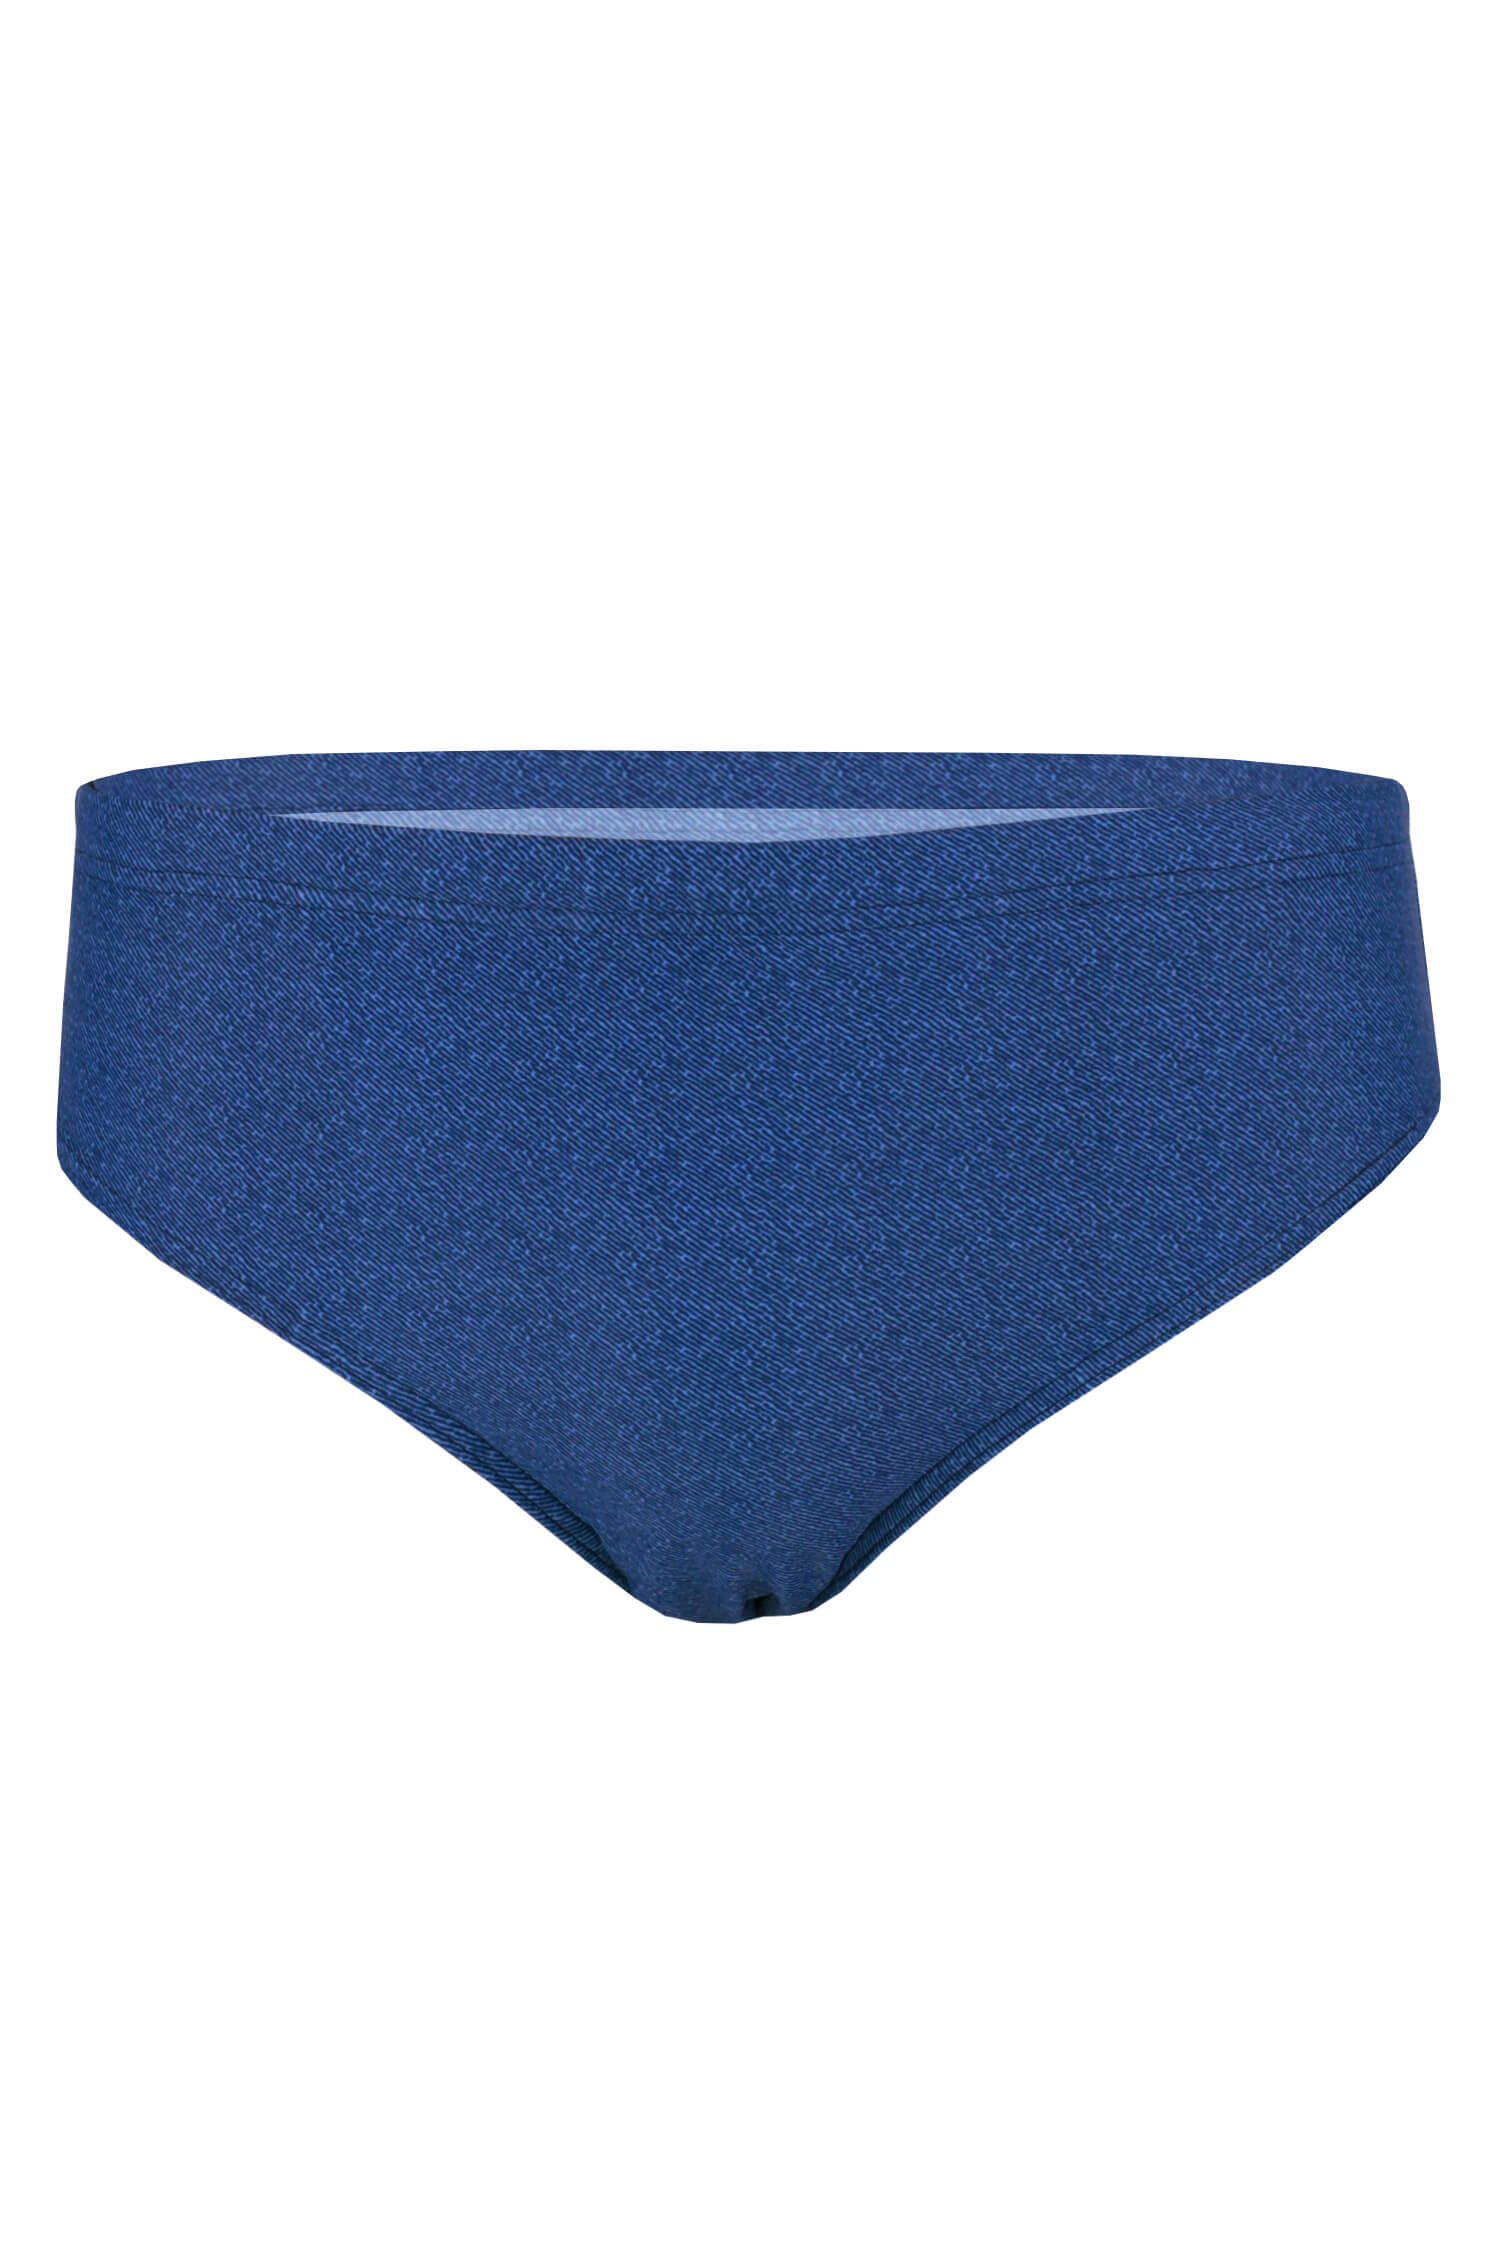 Madera pánské slipové plavky XXL modrá